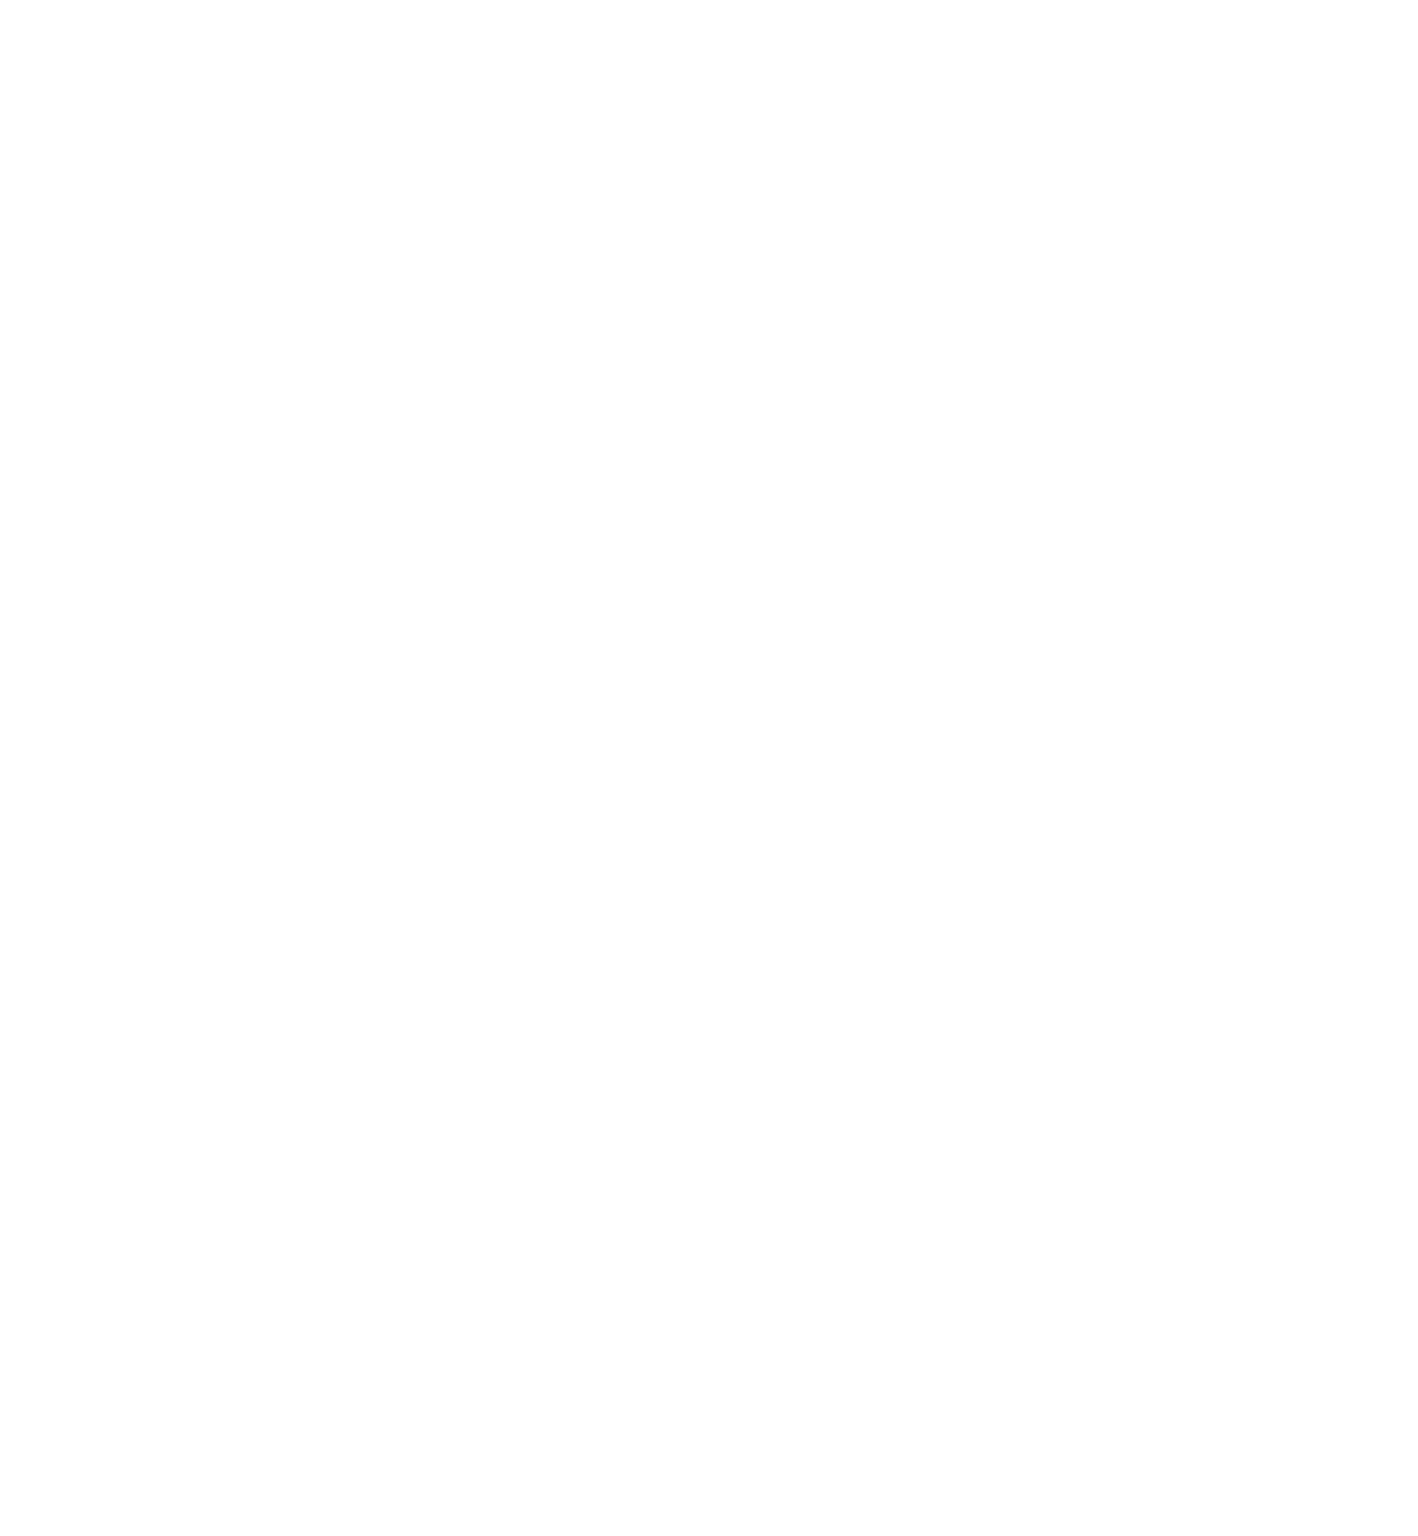 Vitesco Technologies Group logo for dark backgrounds (transparent PNG)